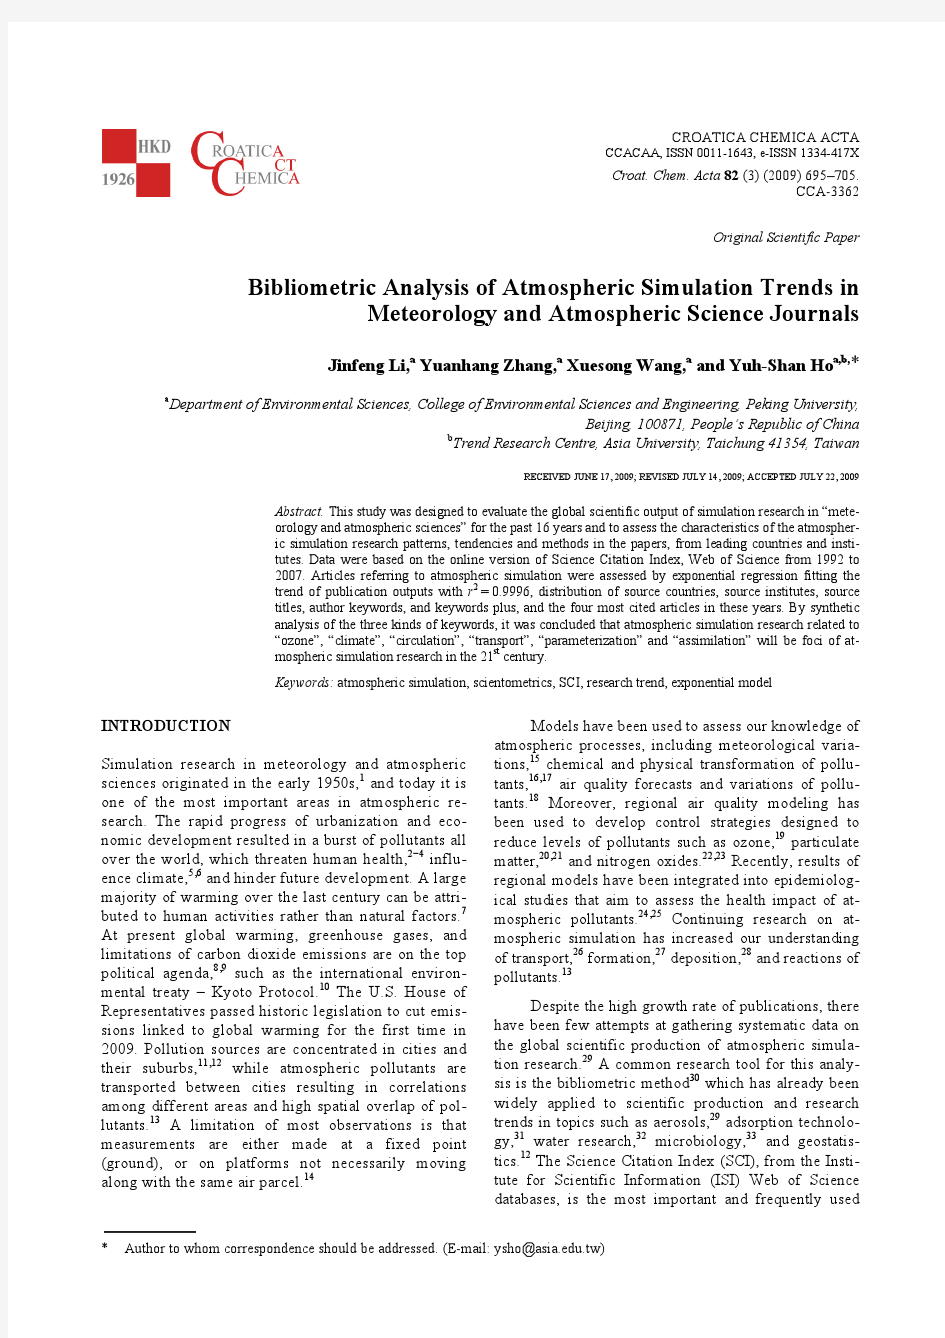 Bibliometric Analysis of Atmospheric Simulation Trends in Meteorology and Atmospheric Science Journa